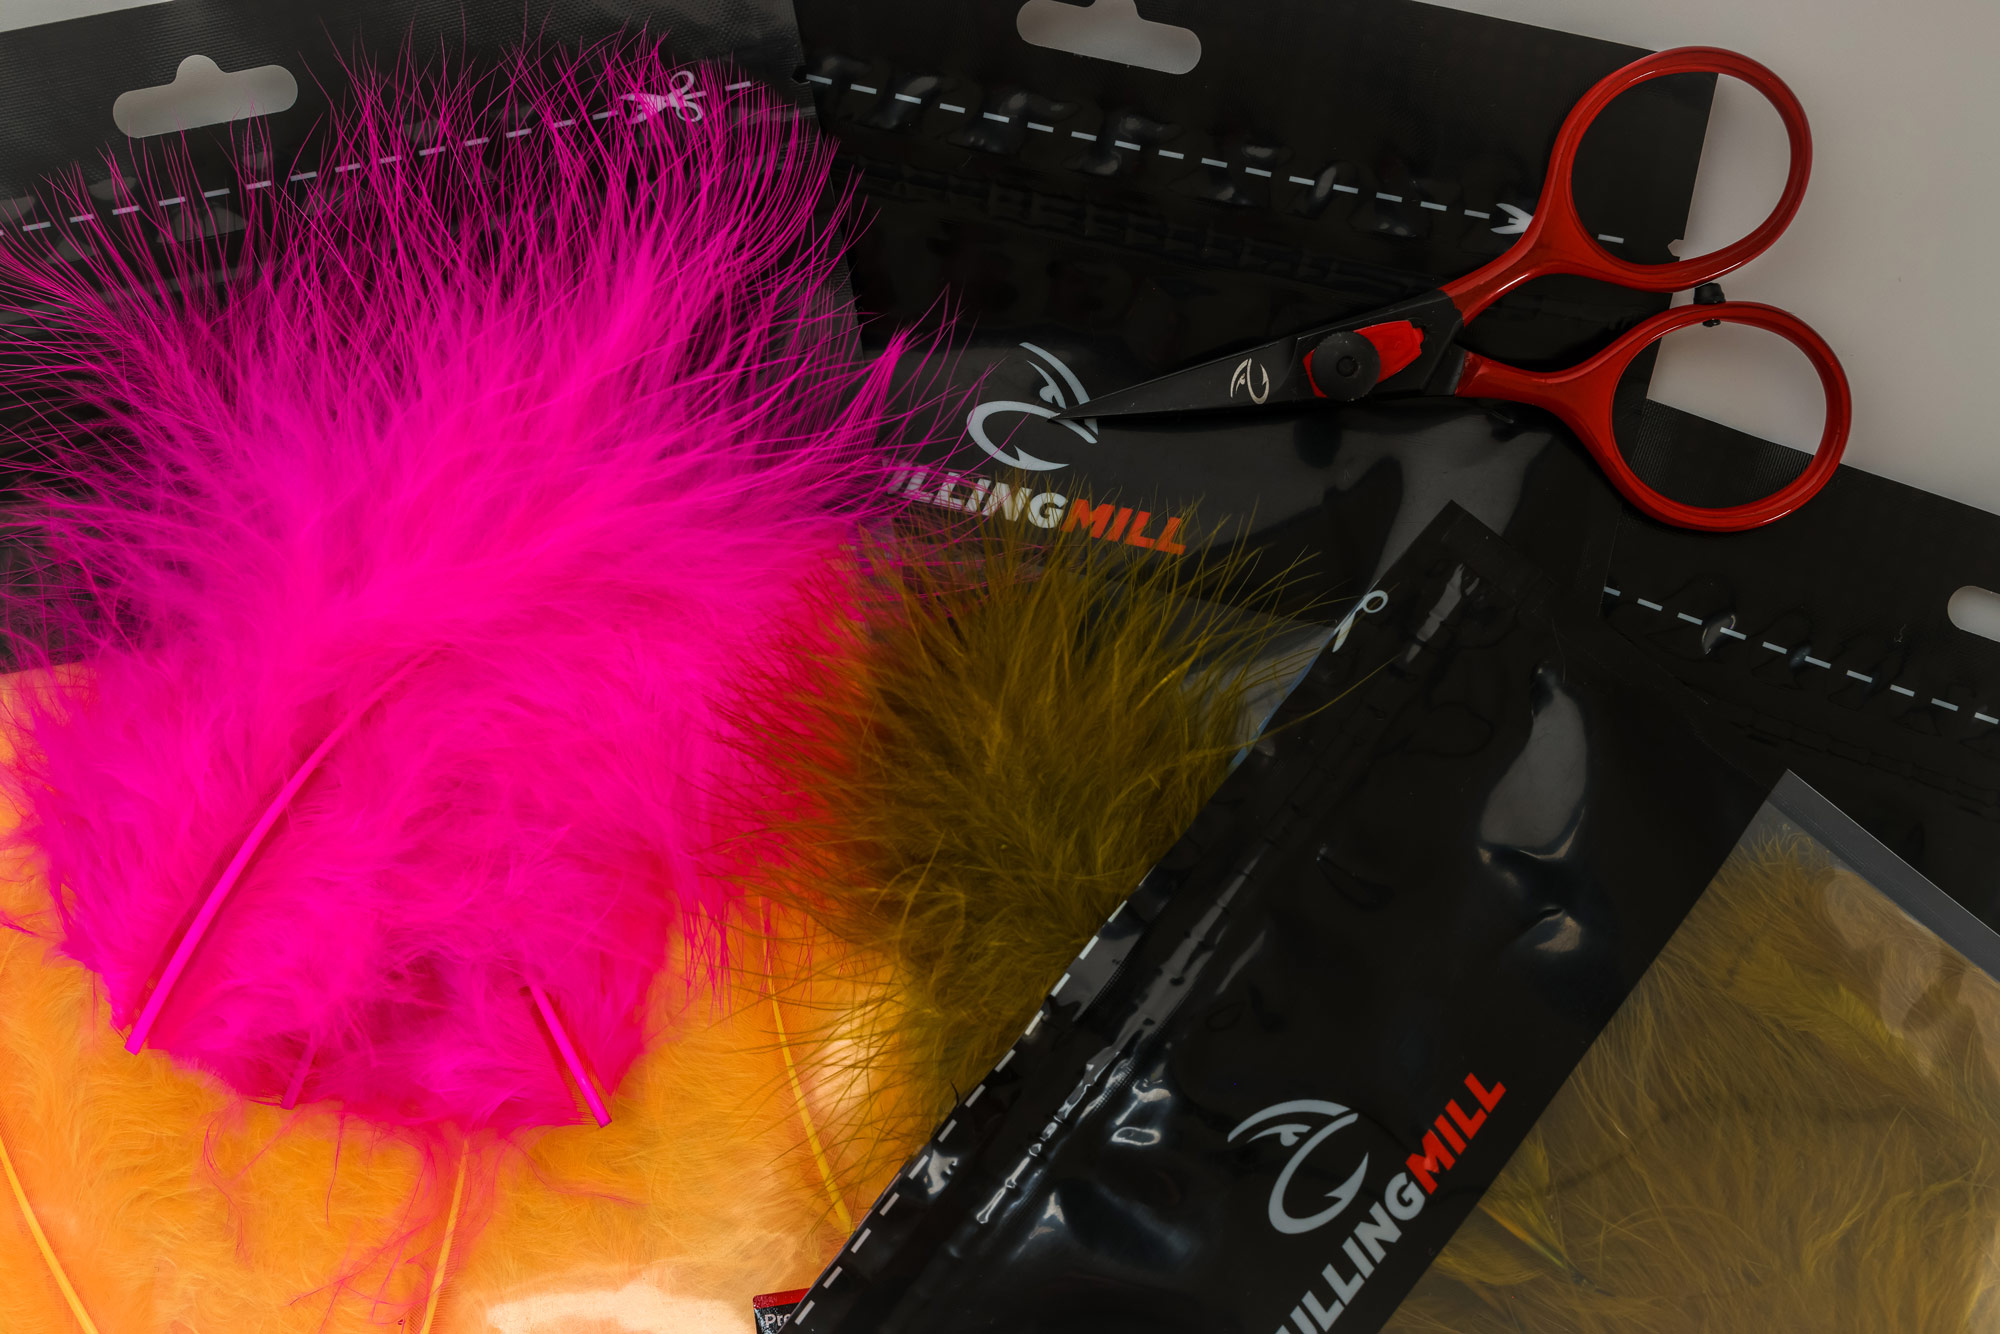 Veniard Turkey Marabou Feathers Fluorescent Pink Fly Tying Materials